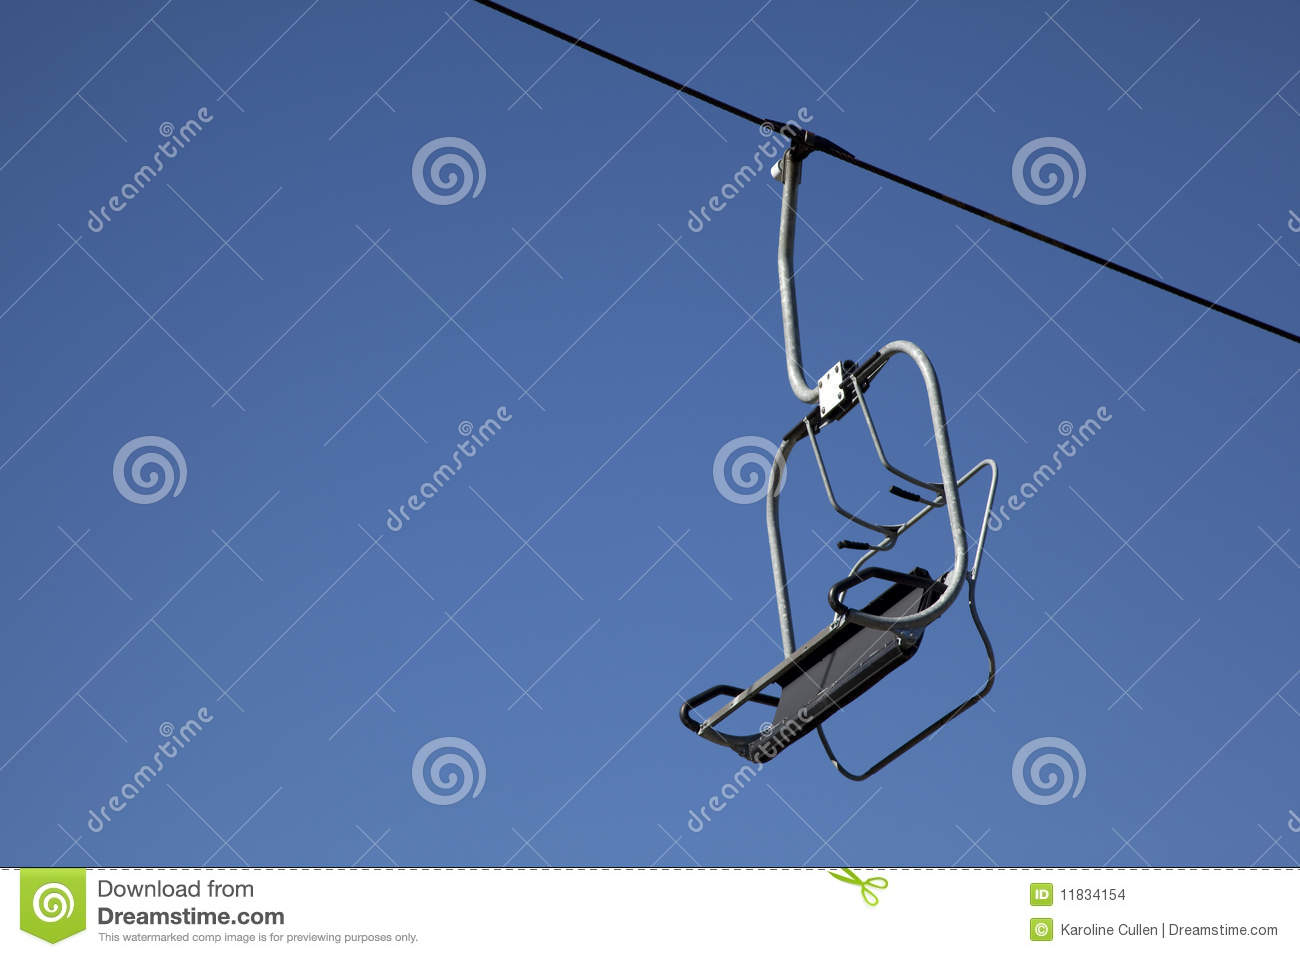 An Empty Chair On A Ski Lift Against A Clear Blue Sky 